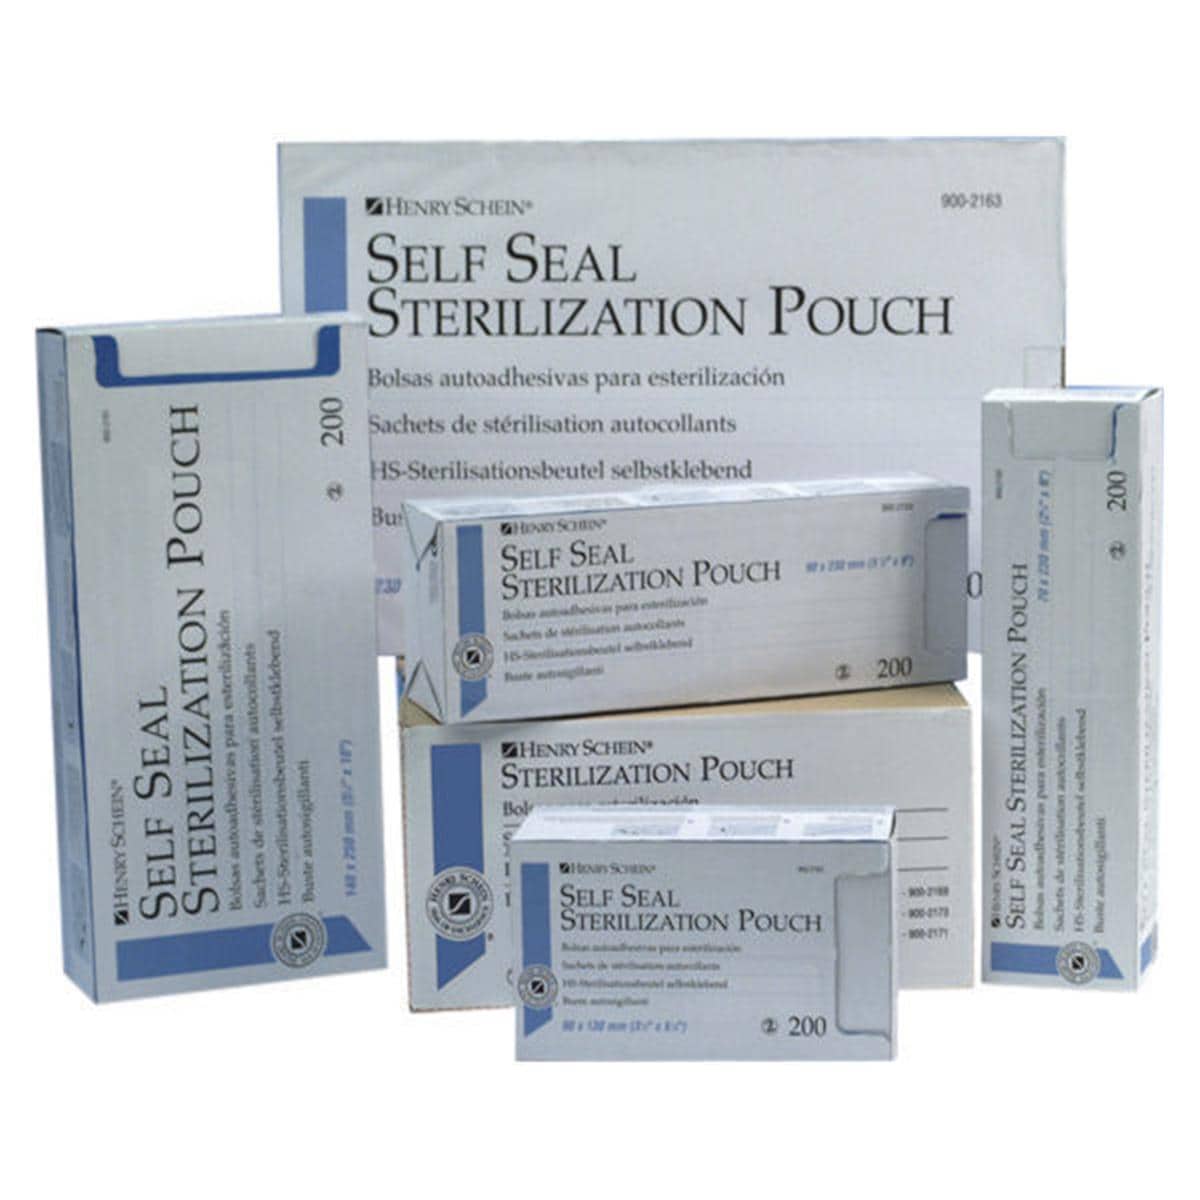 HS-Sterilisationsbeutel selbstklebend, Self seal Sterilisation Pouch - Größe 134 x 280 mm, Packung 200 Stück